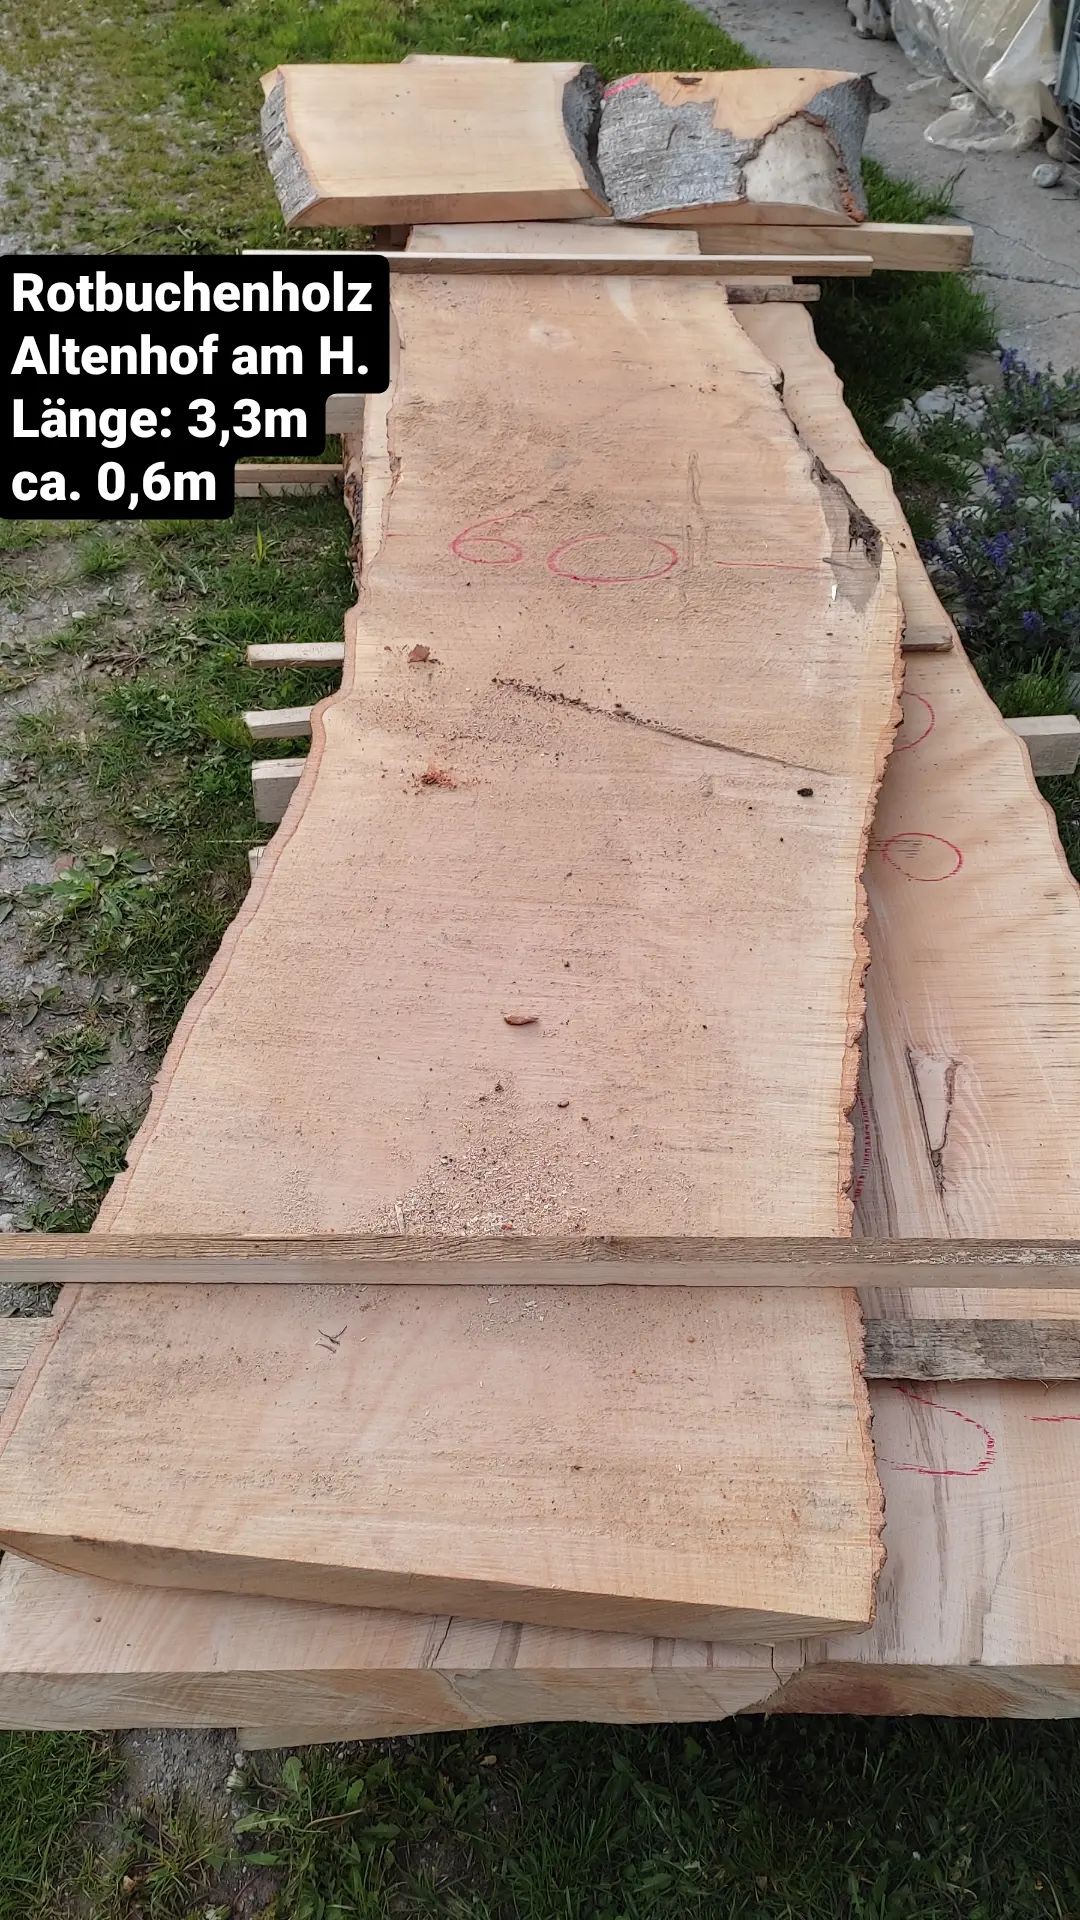 Tischplattenrohling Esstisch ca.1,05-0,7m L=4,6m Rotbuchenholz aus Altenhof am Hausruck